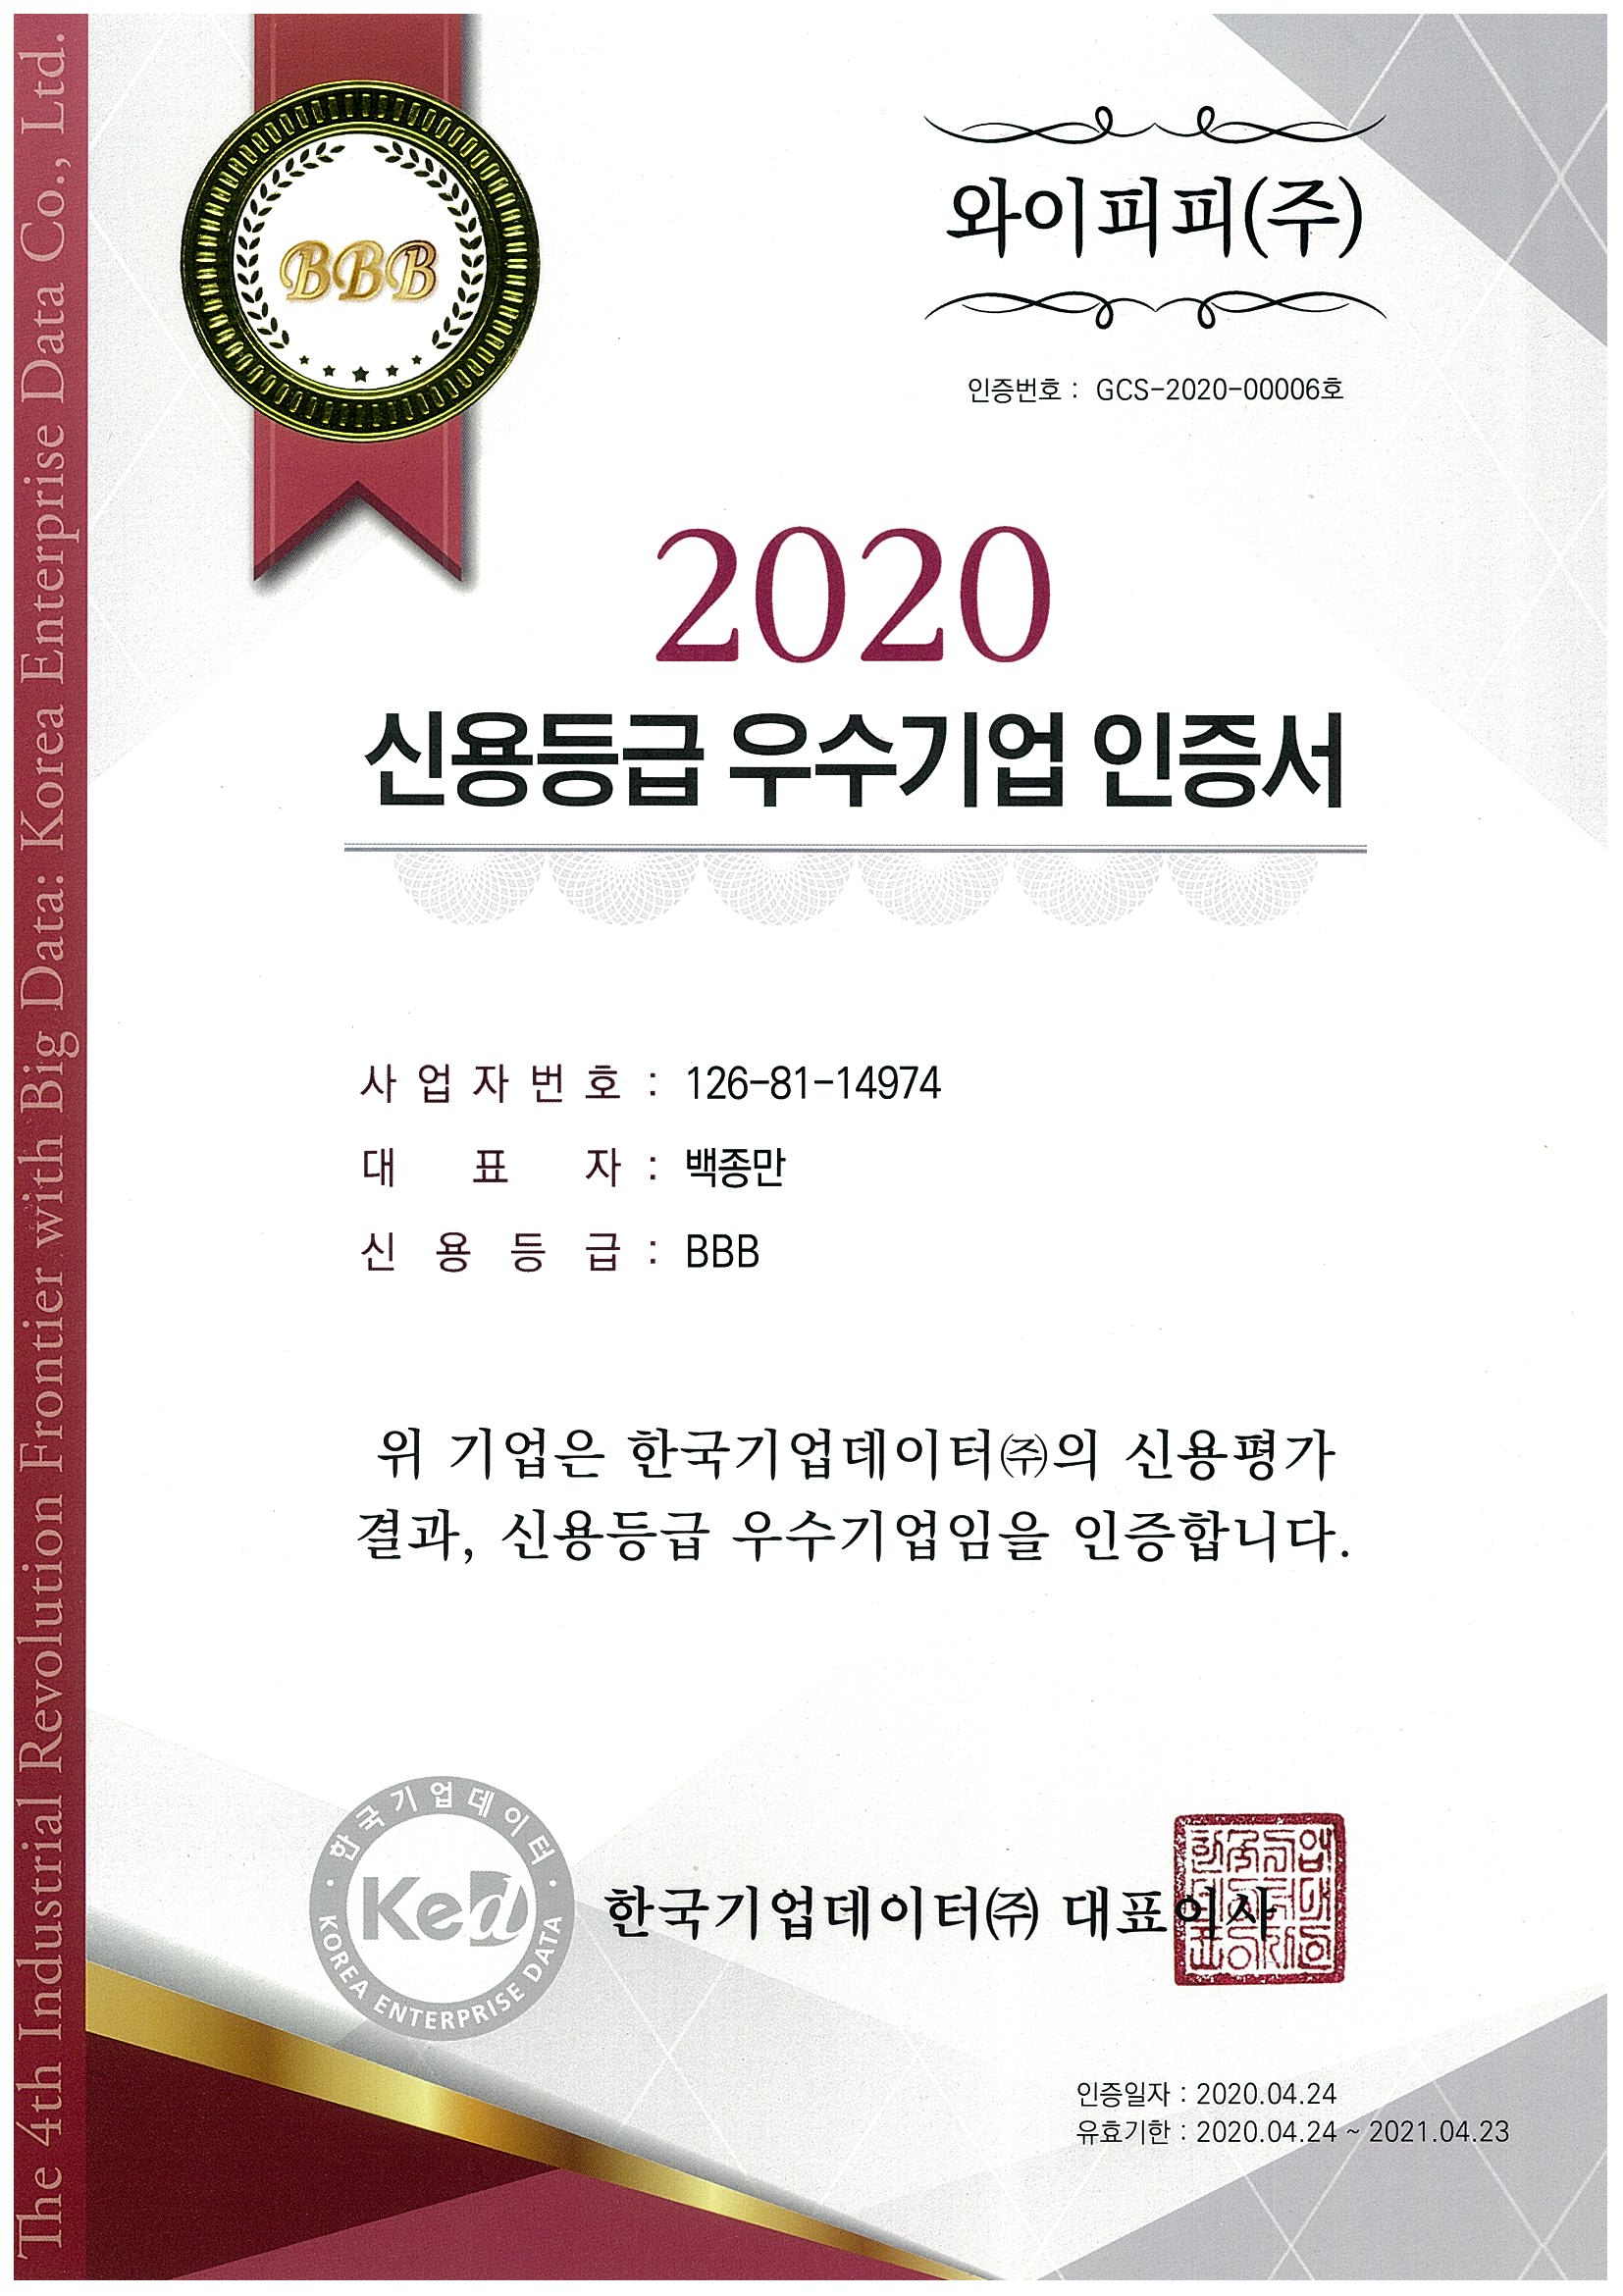 Certificate of Excellent Credit Rating 2020, Korea Enterprise Data.jpg